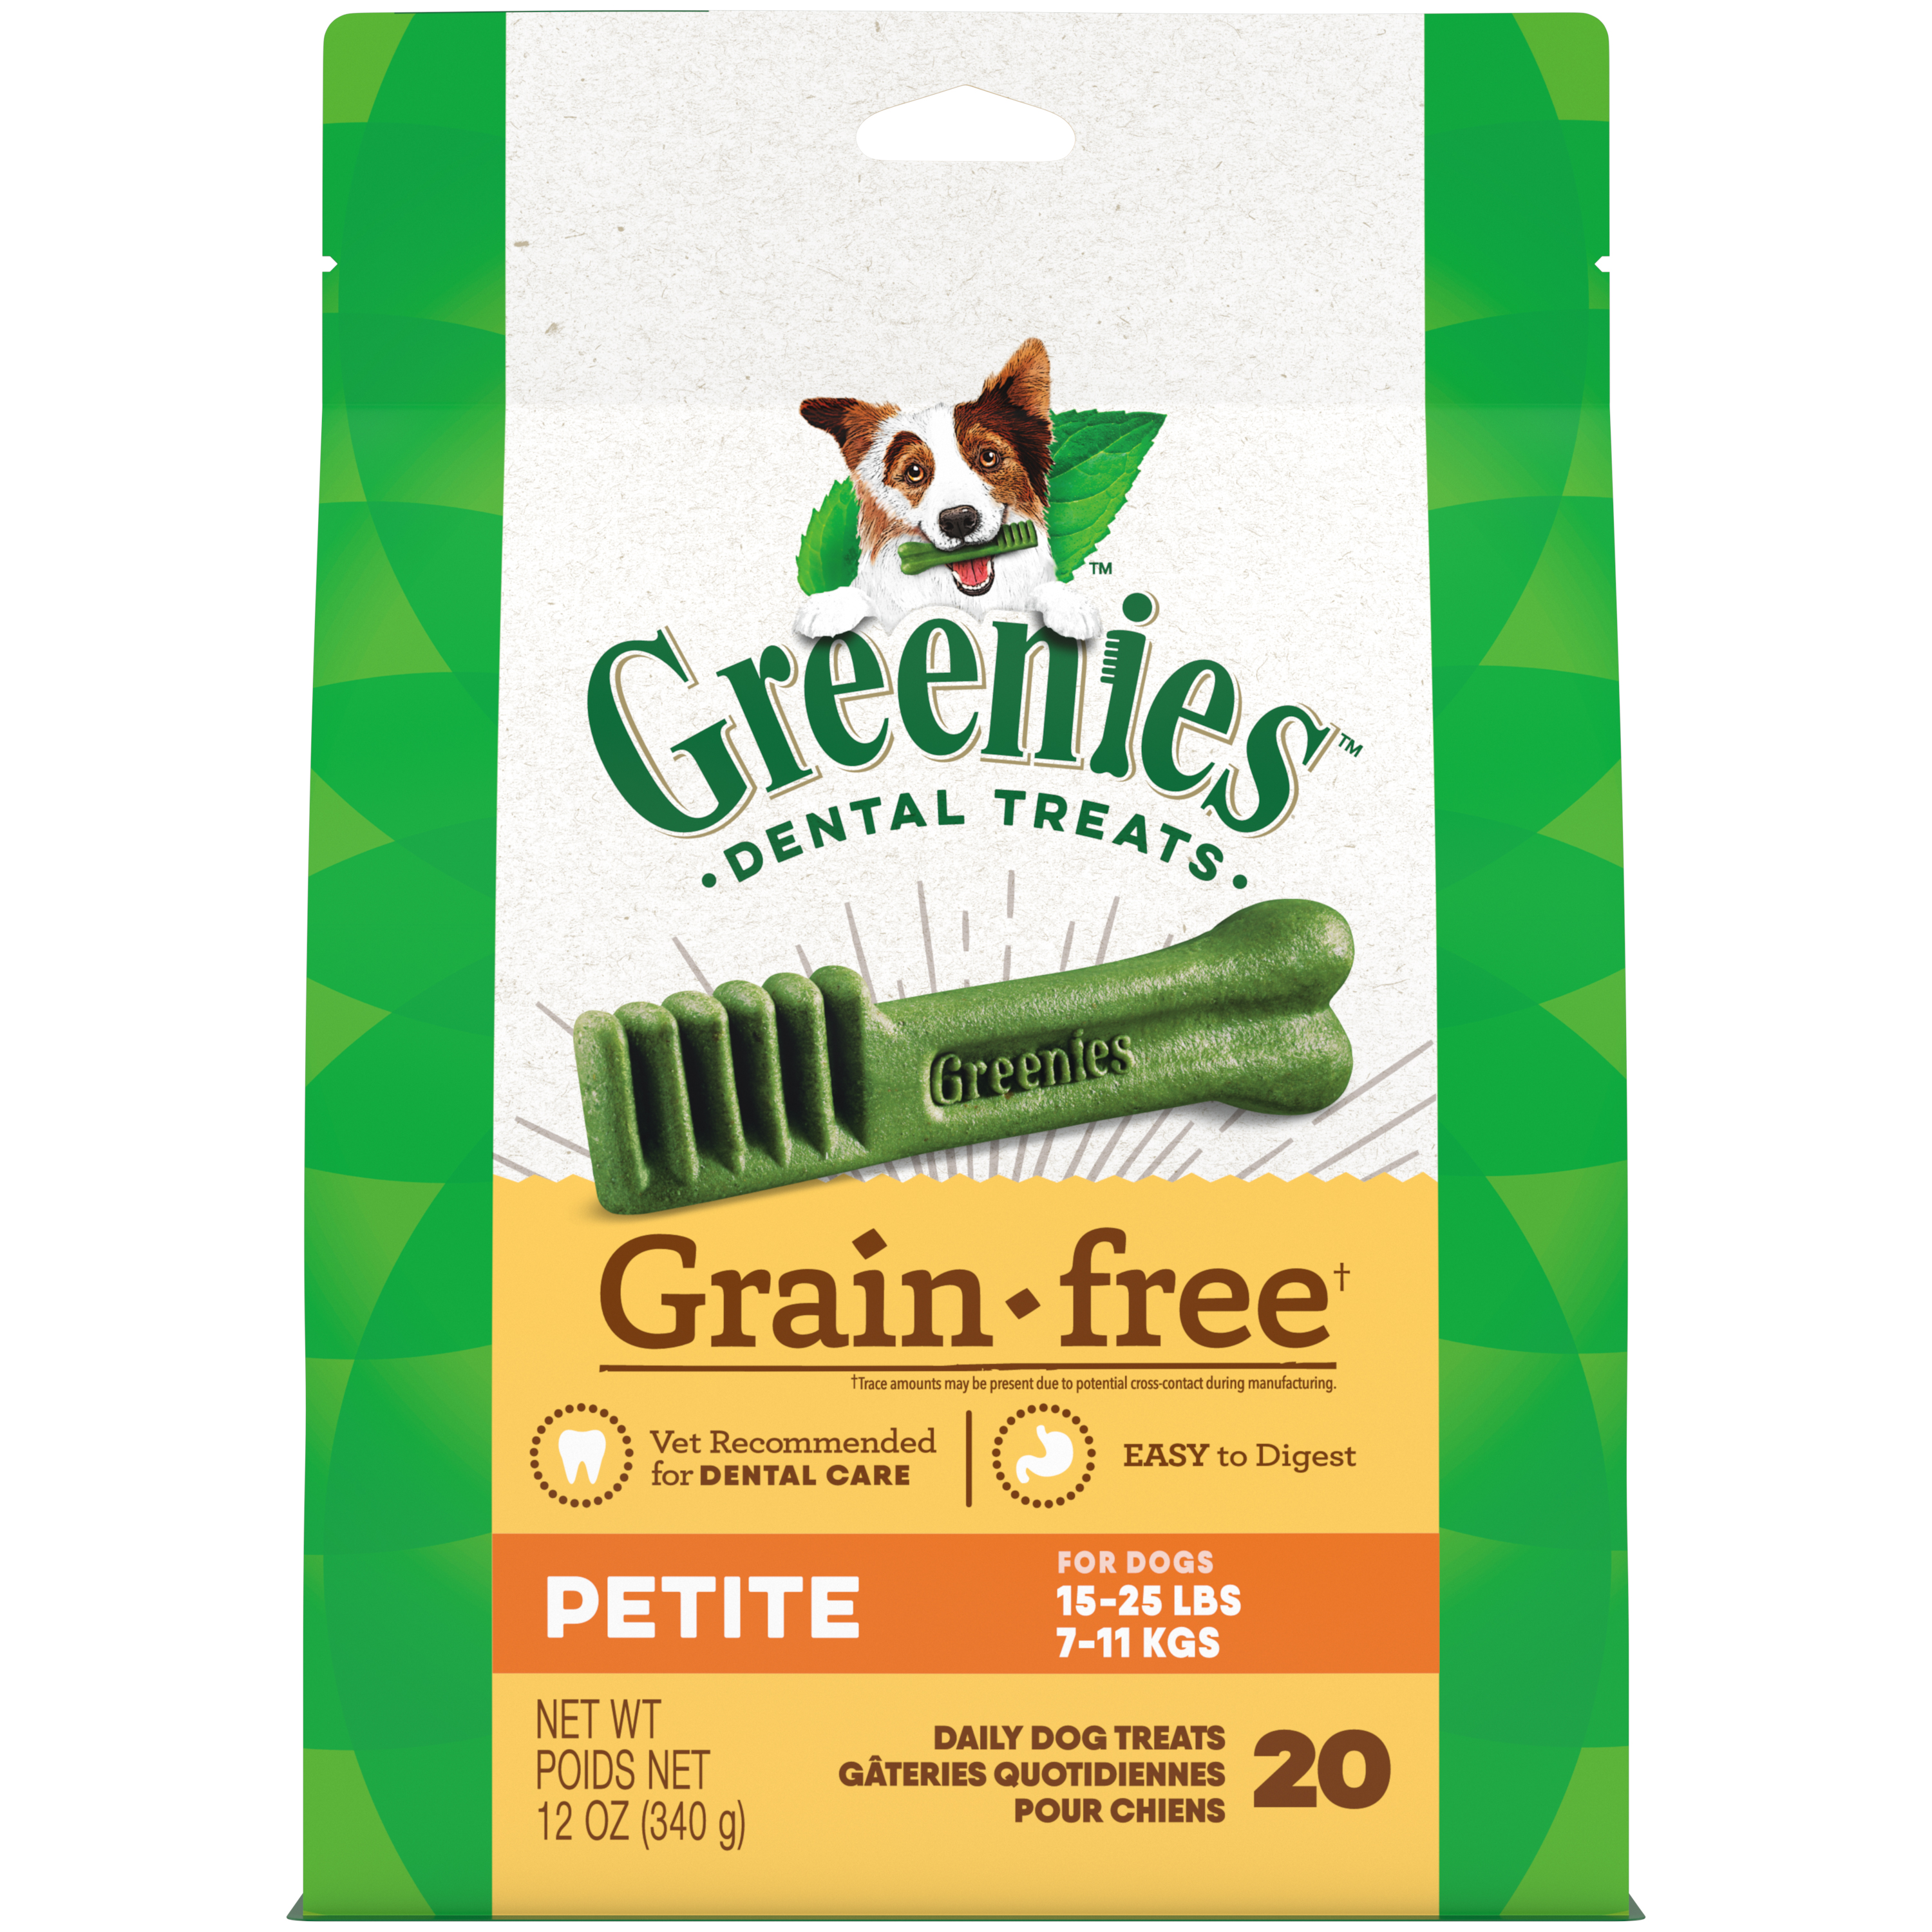 12 oz. Greenies Grain Free Petite Treat Pack - Treats